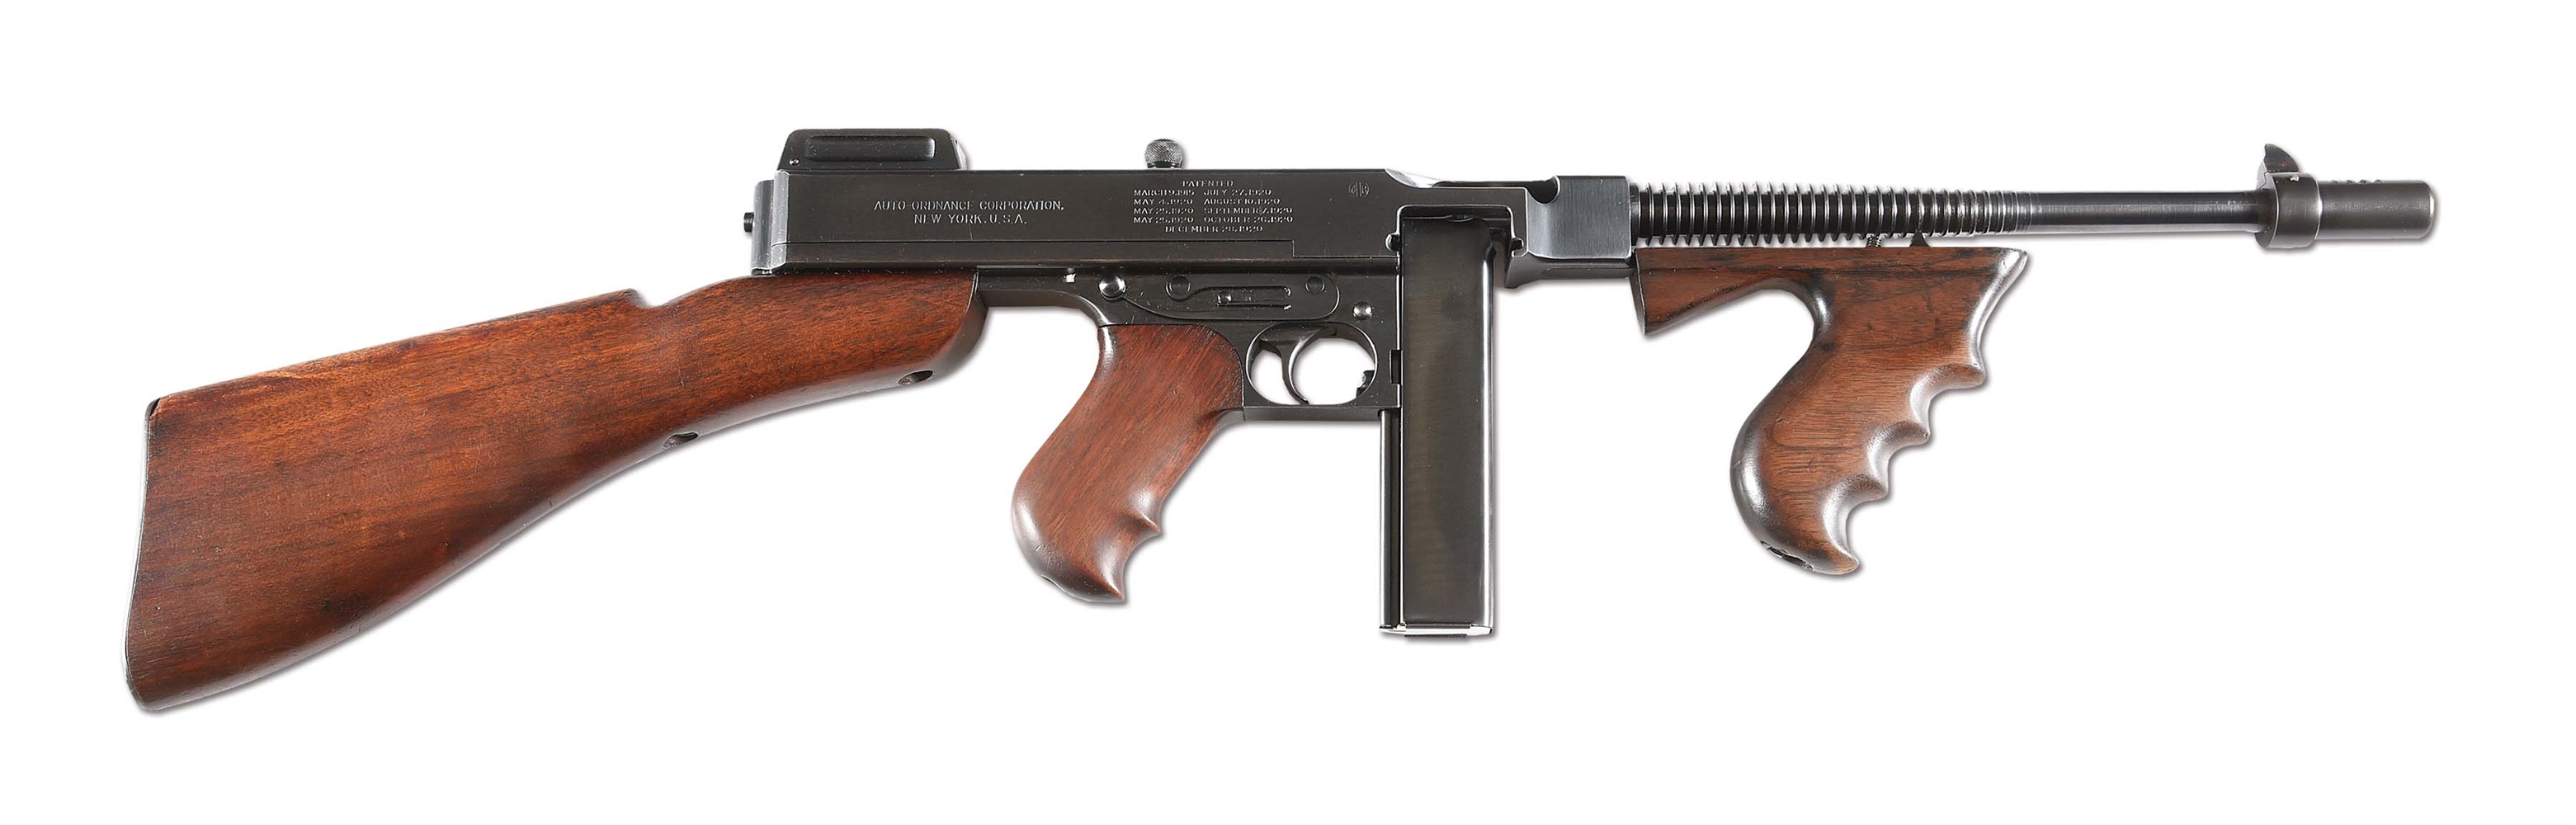 (N) SPECTACULAR HIGH ORIGINAL CONDITION COLT 1921A THOMPSON 1921 MACHINE GUN (CURIO AND RELIC).